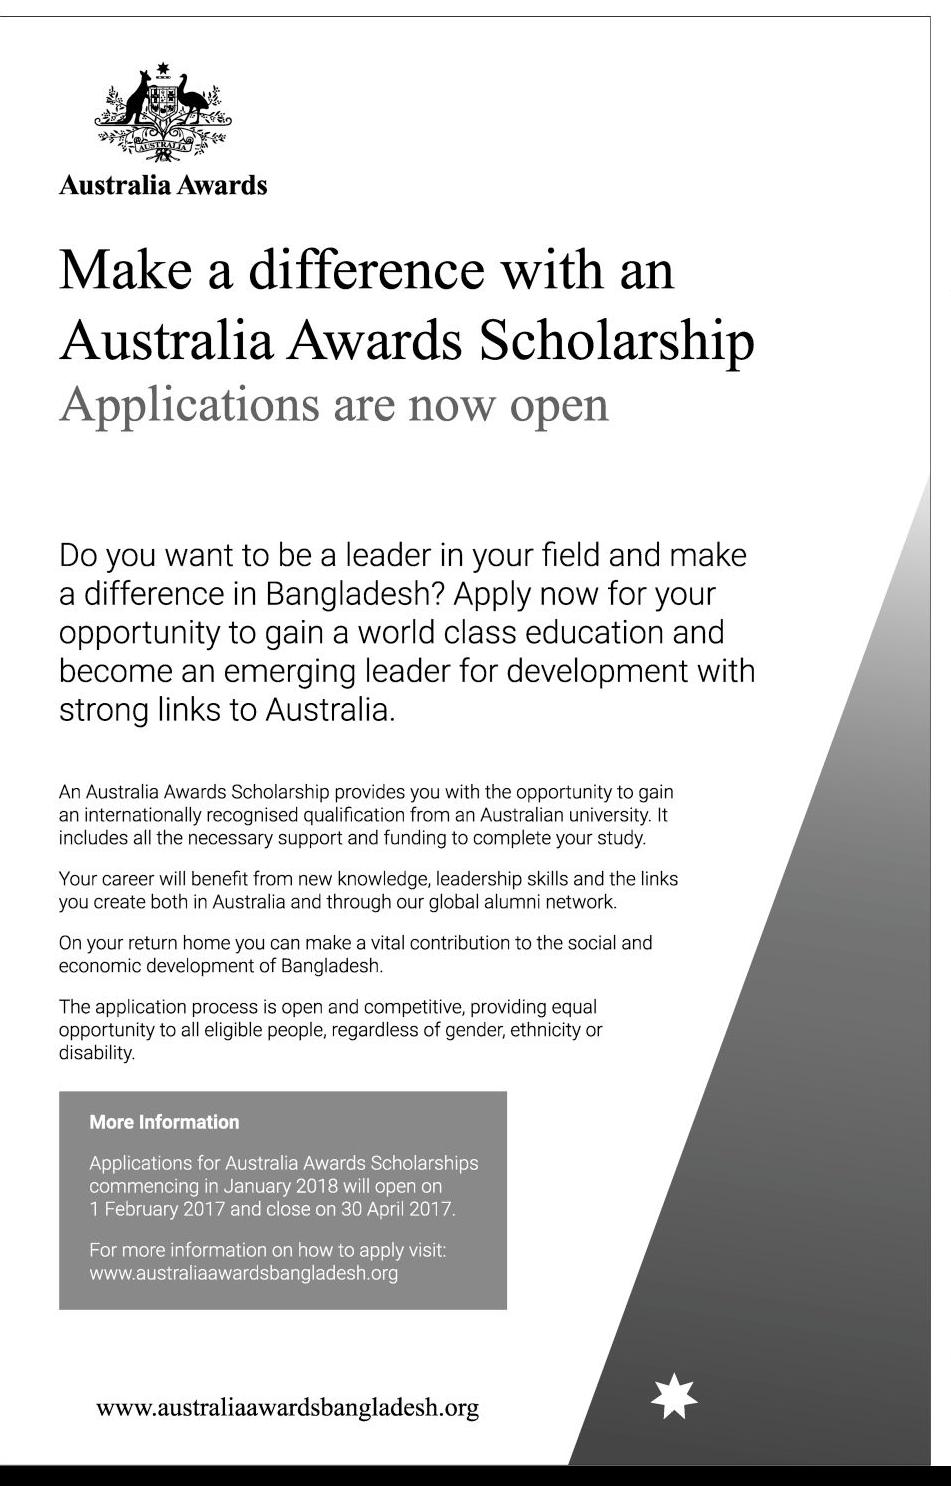 adelaide international postgraduate coursework scholarships (aipcs) australia 2016